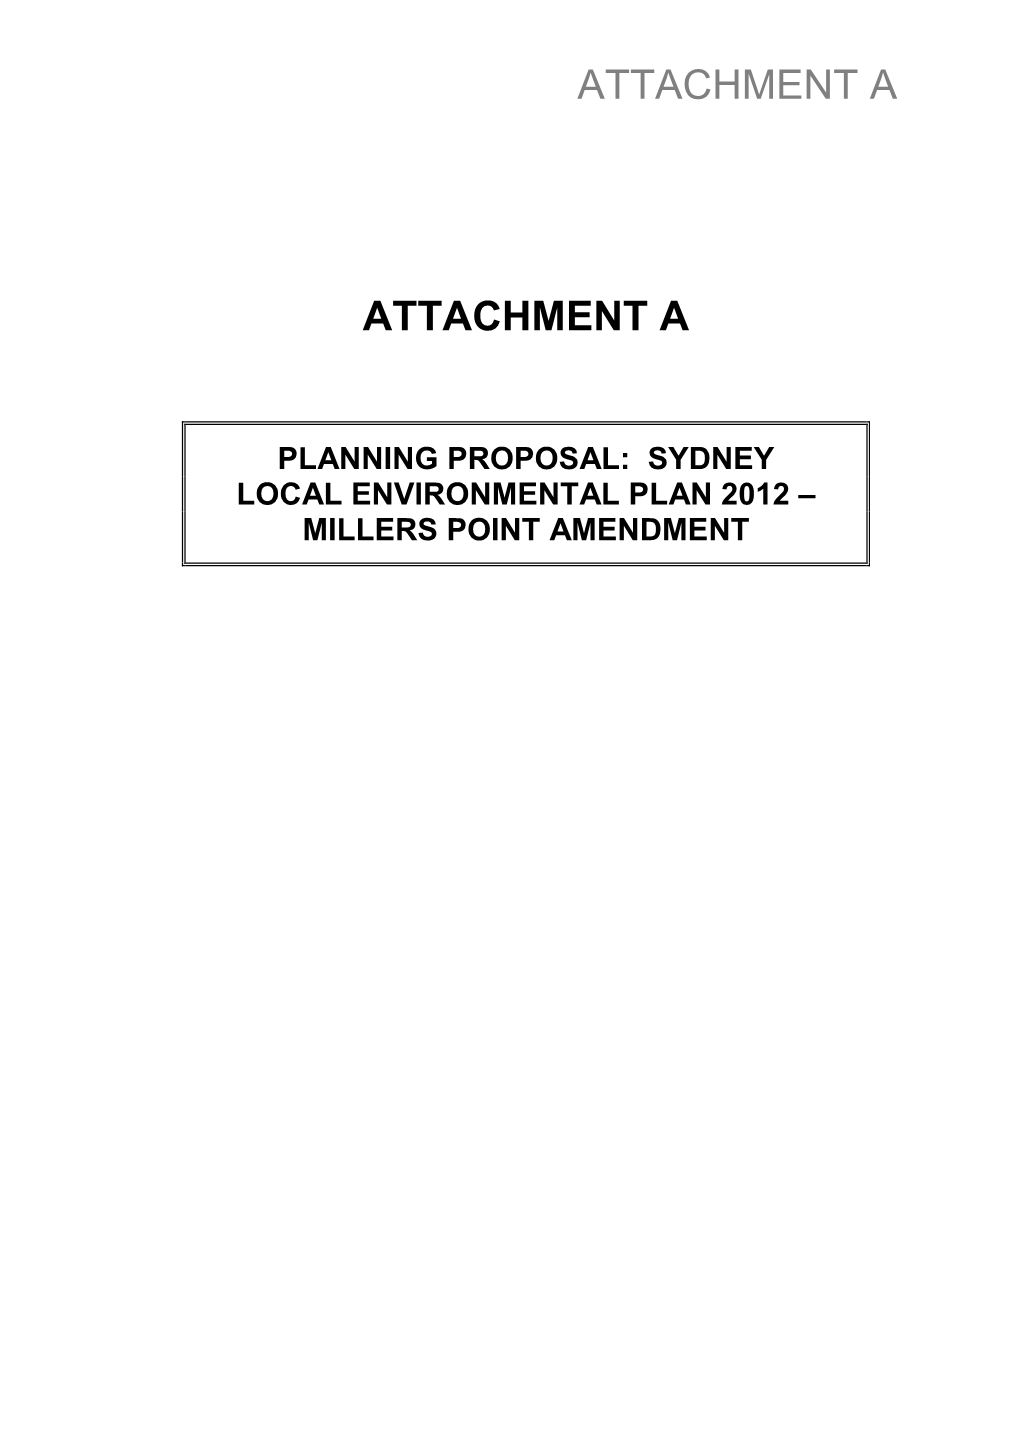 Sydney Local Environmental Plan 2012 – Millers Point Amendment